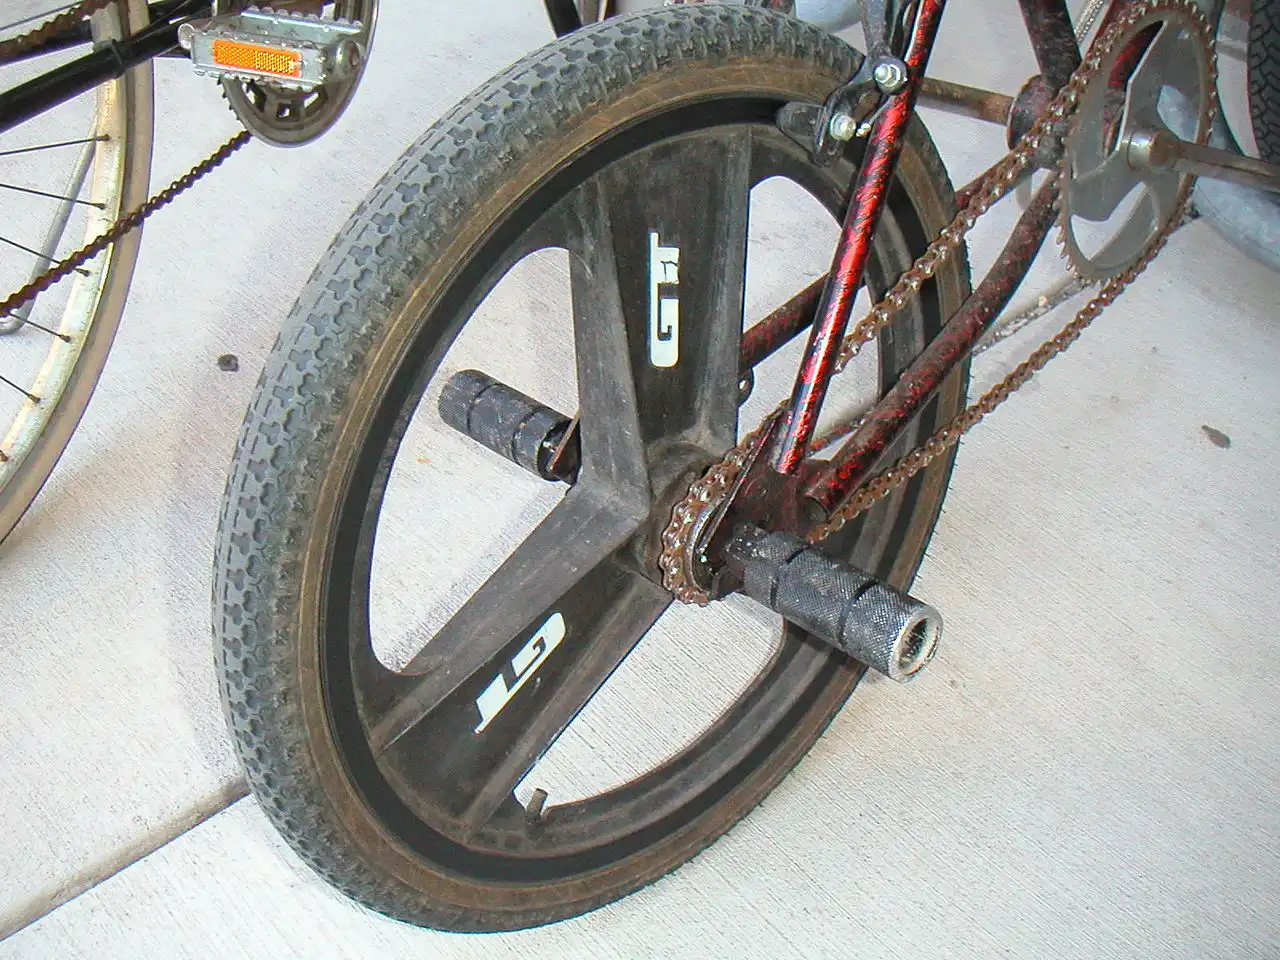 dirt-bike-parts-important-parts-breakdown-what-are-dirt-bike-parts-bmx-bike-parts-bmx-parts-bmx-bicycle-wheel-leisure-biking-diy-uniqsource-com